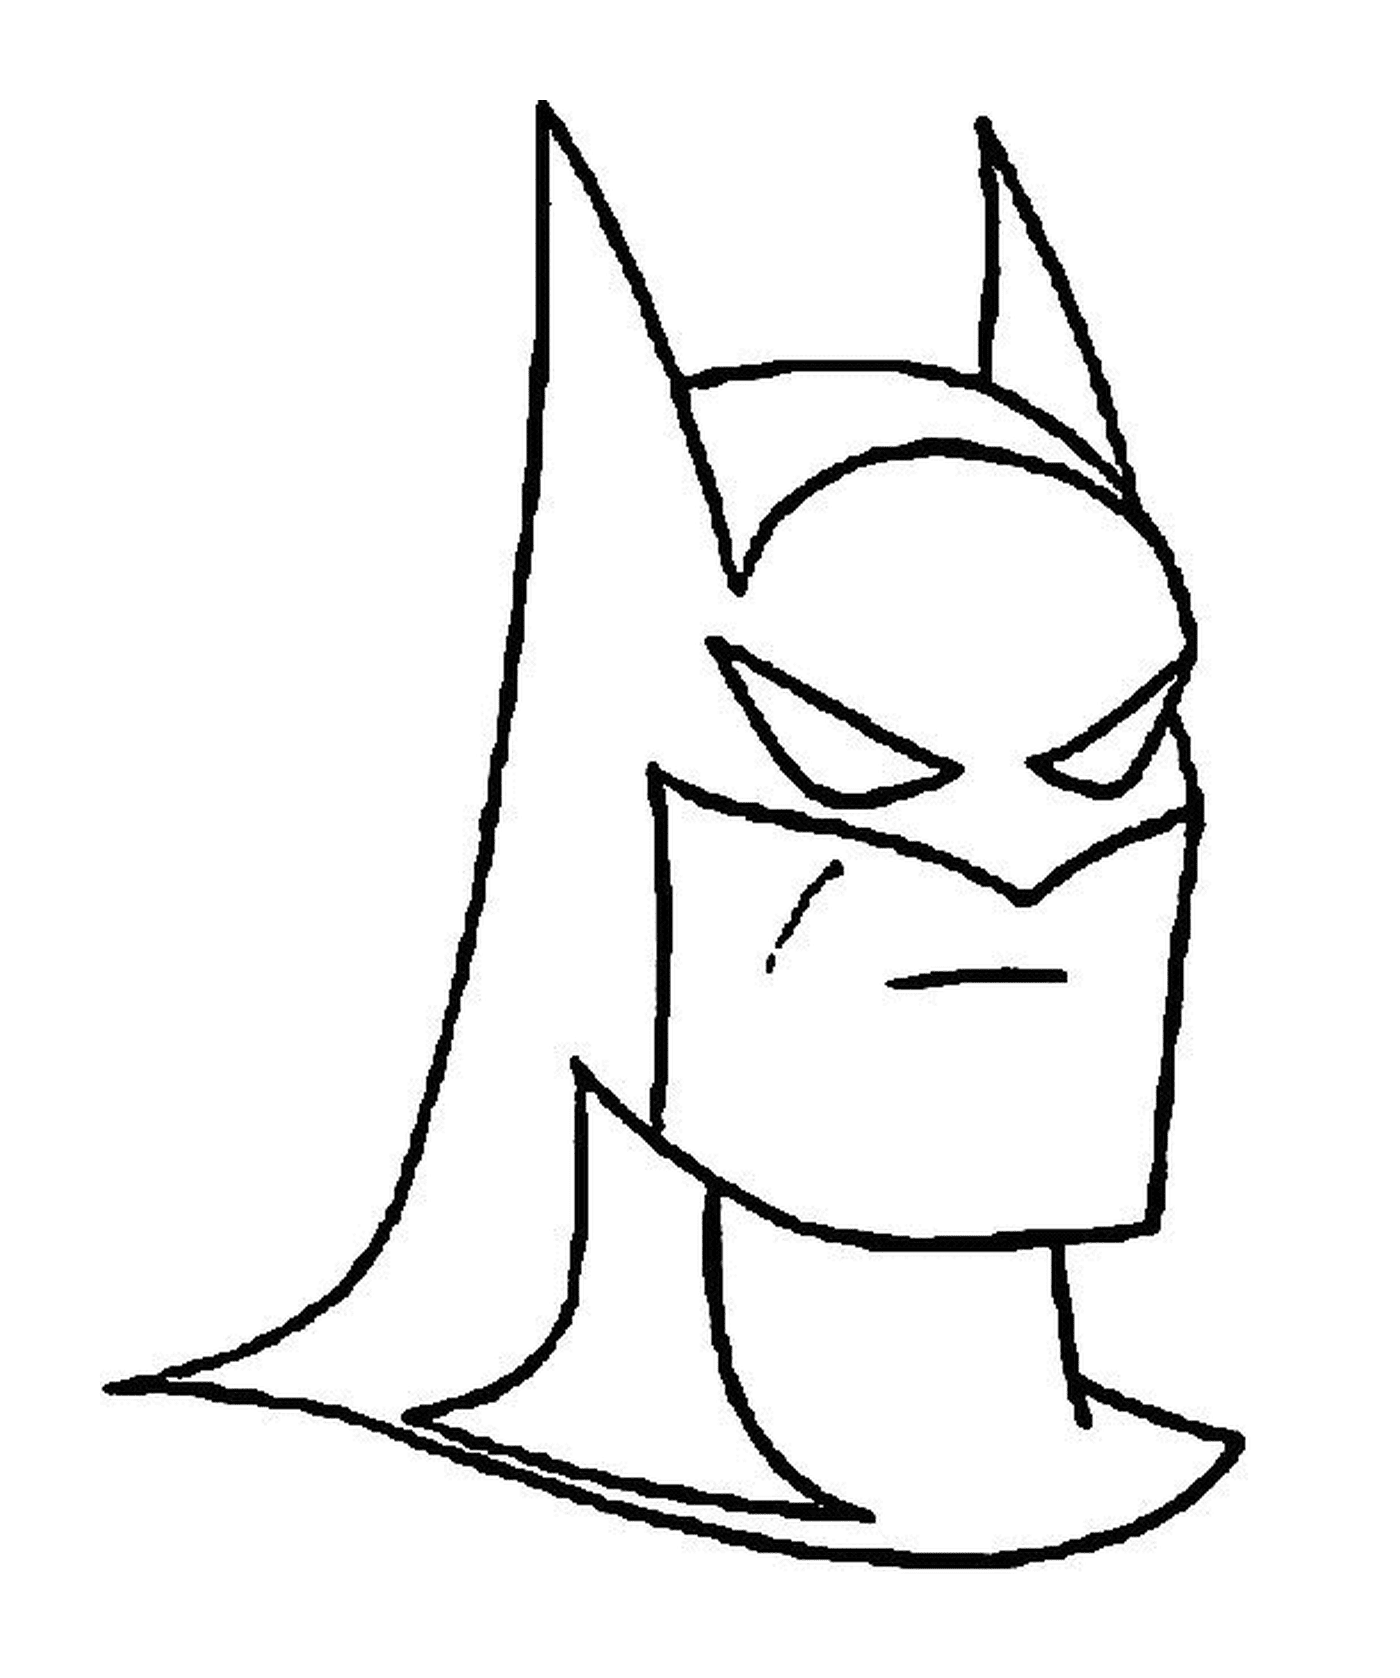  Máscara Batman com uma capa 